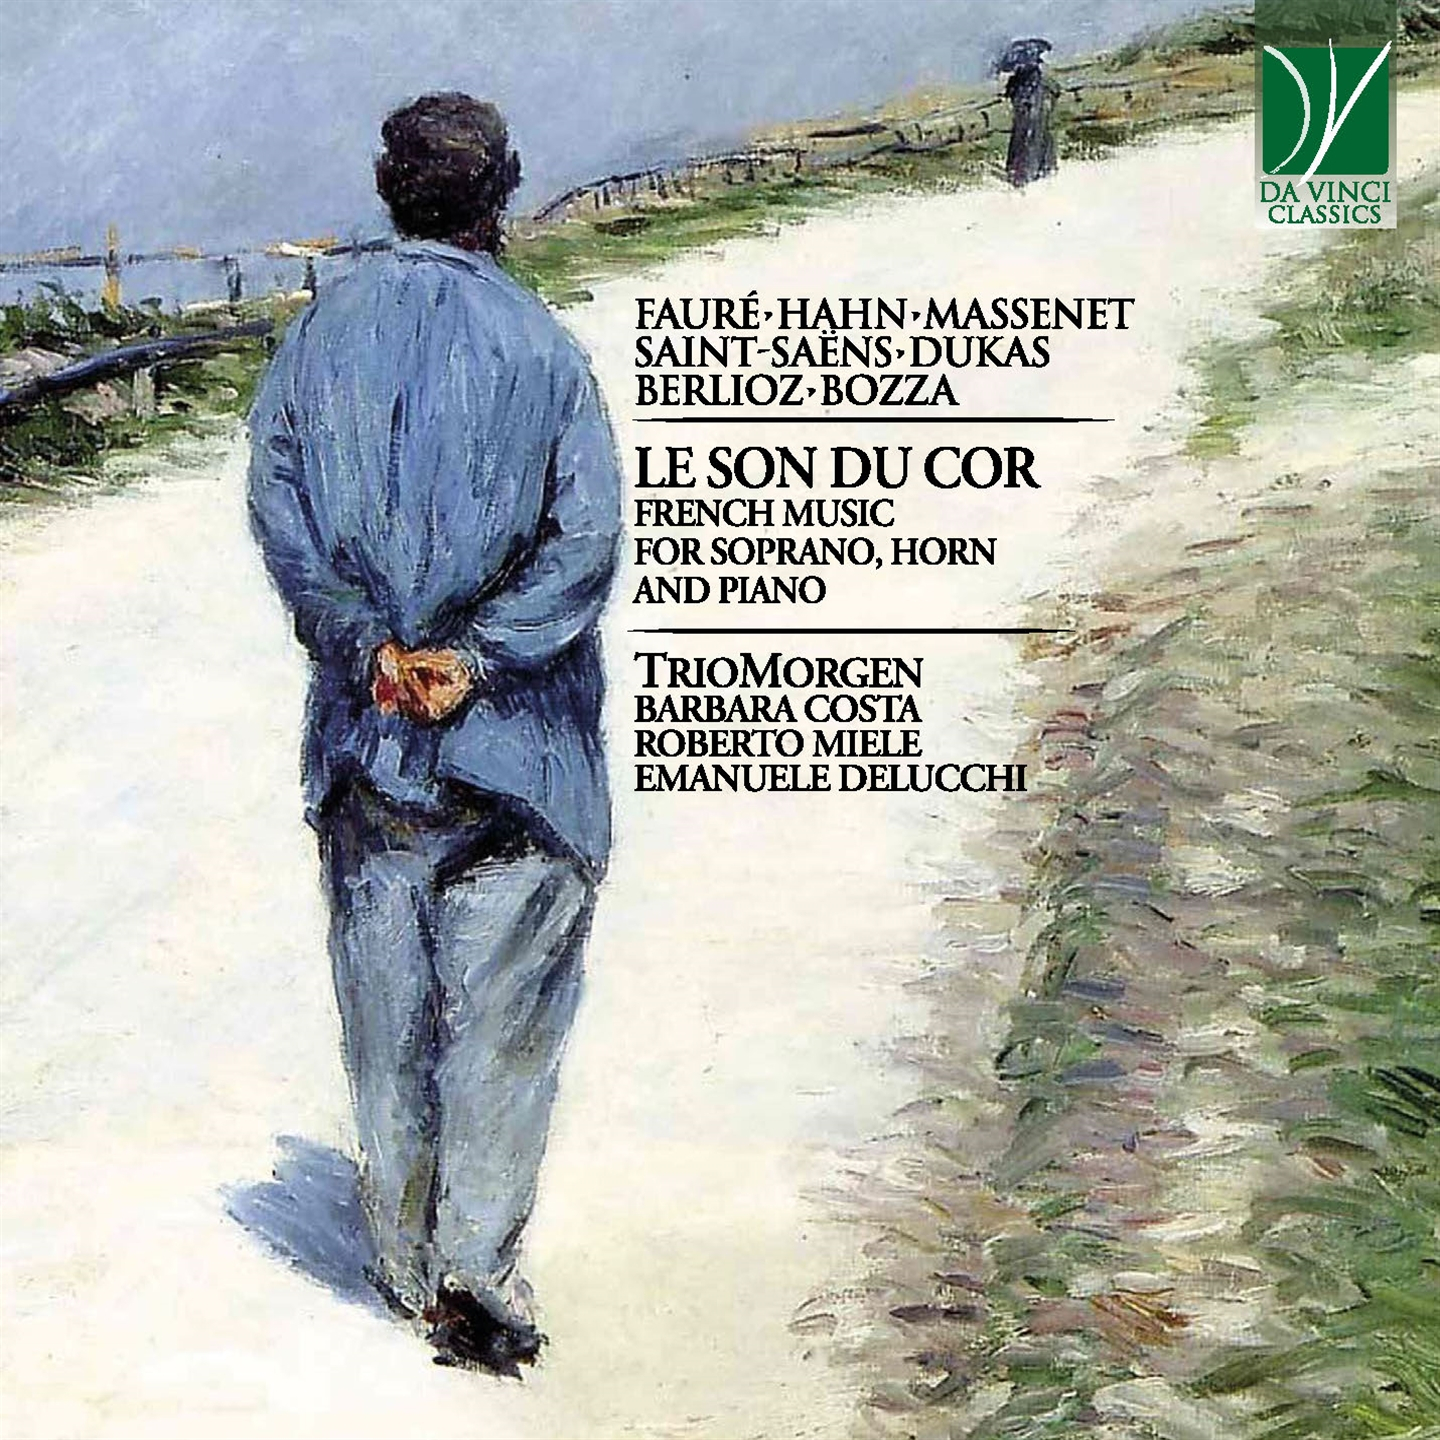 Morgen Trio - Le Son Du Cor: French Music For Soprano, Horn And Piano - Picture 1 of 1